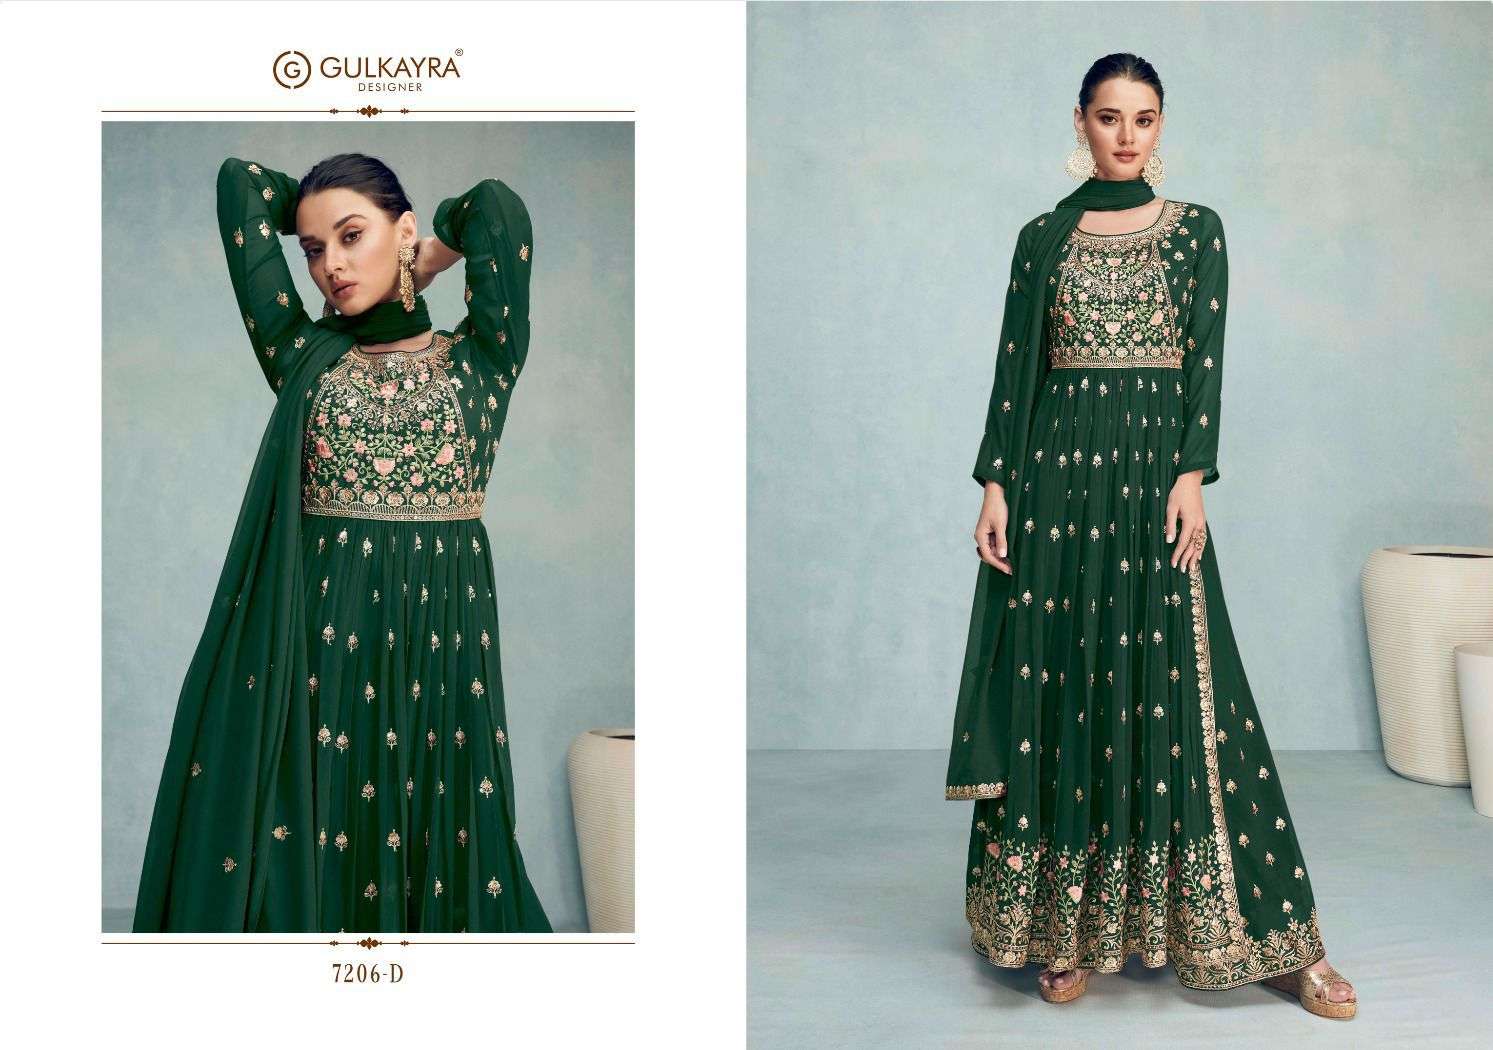 gulkayra nayra vol-6 7206 colour series latest designer full stitched salwar kameez wholesaler surat gujarat